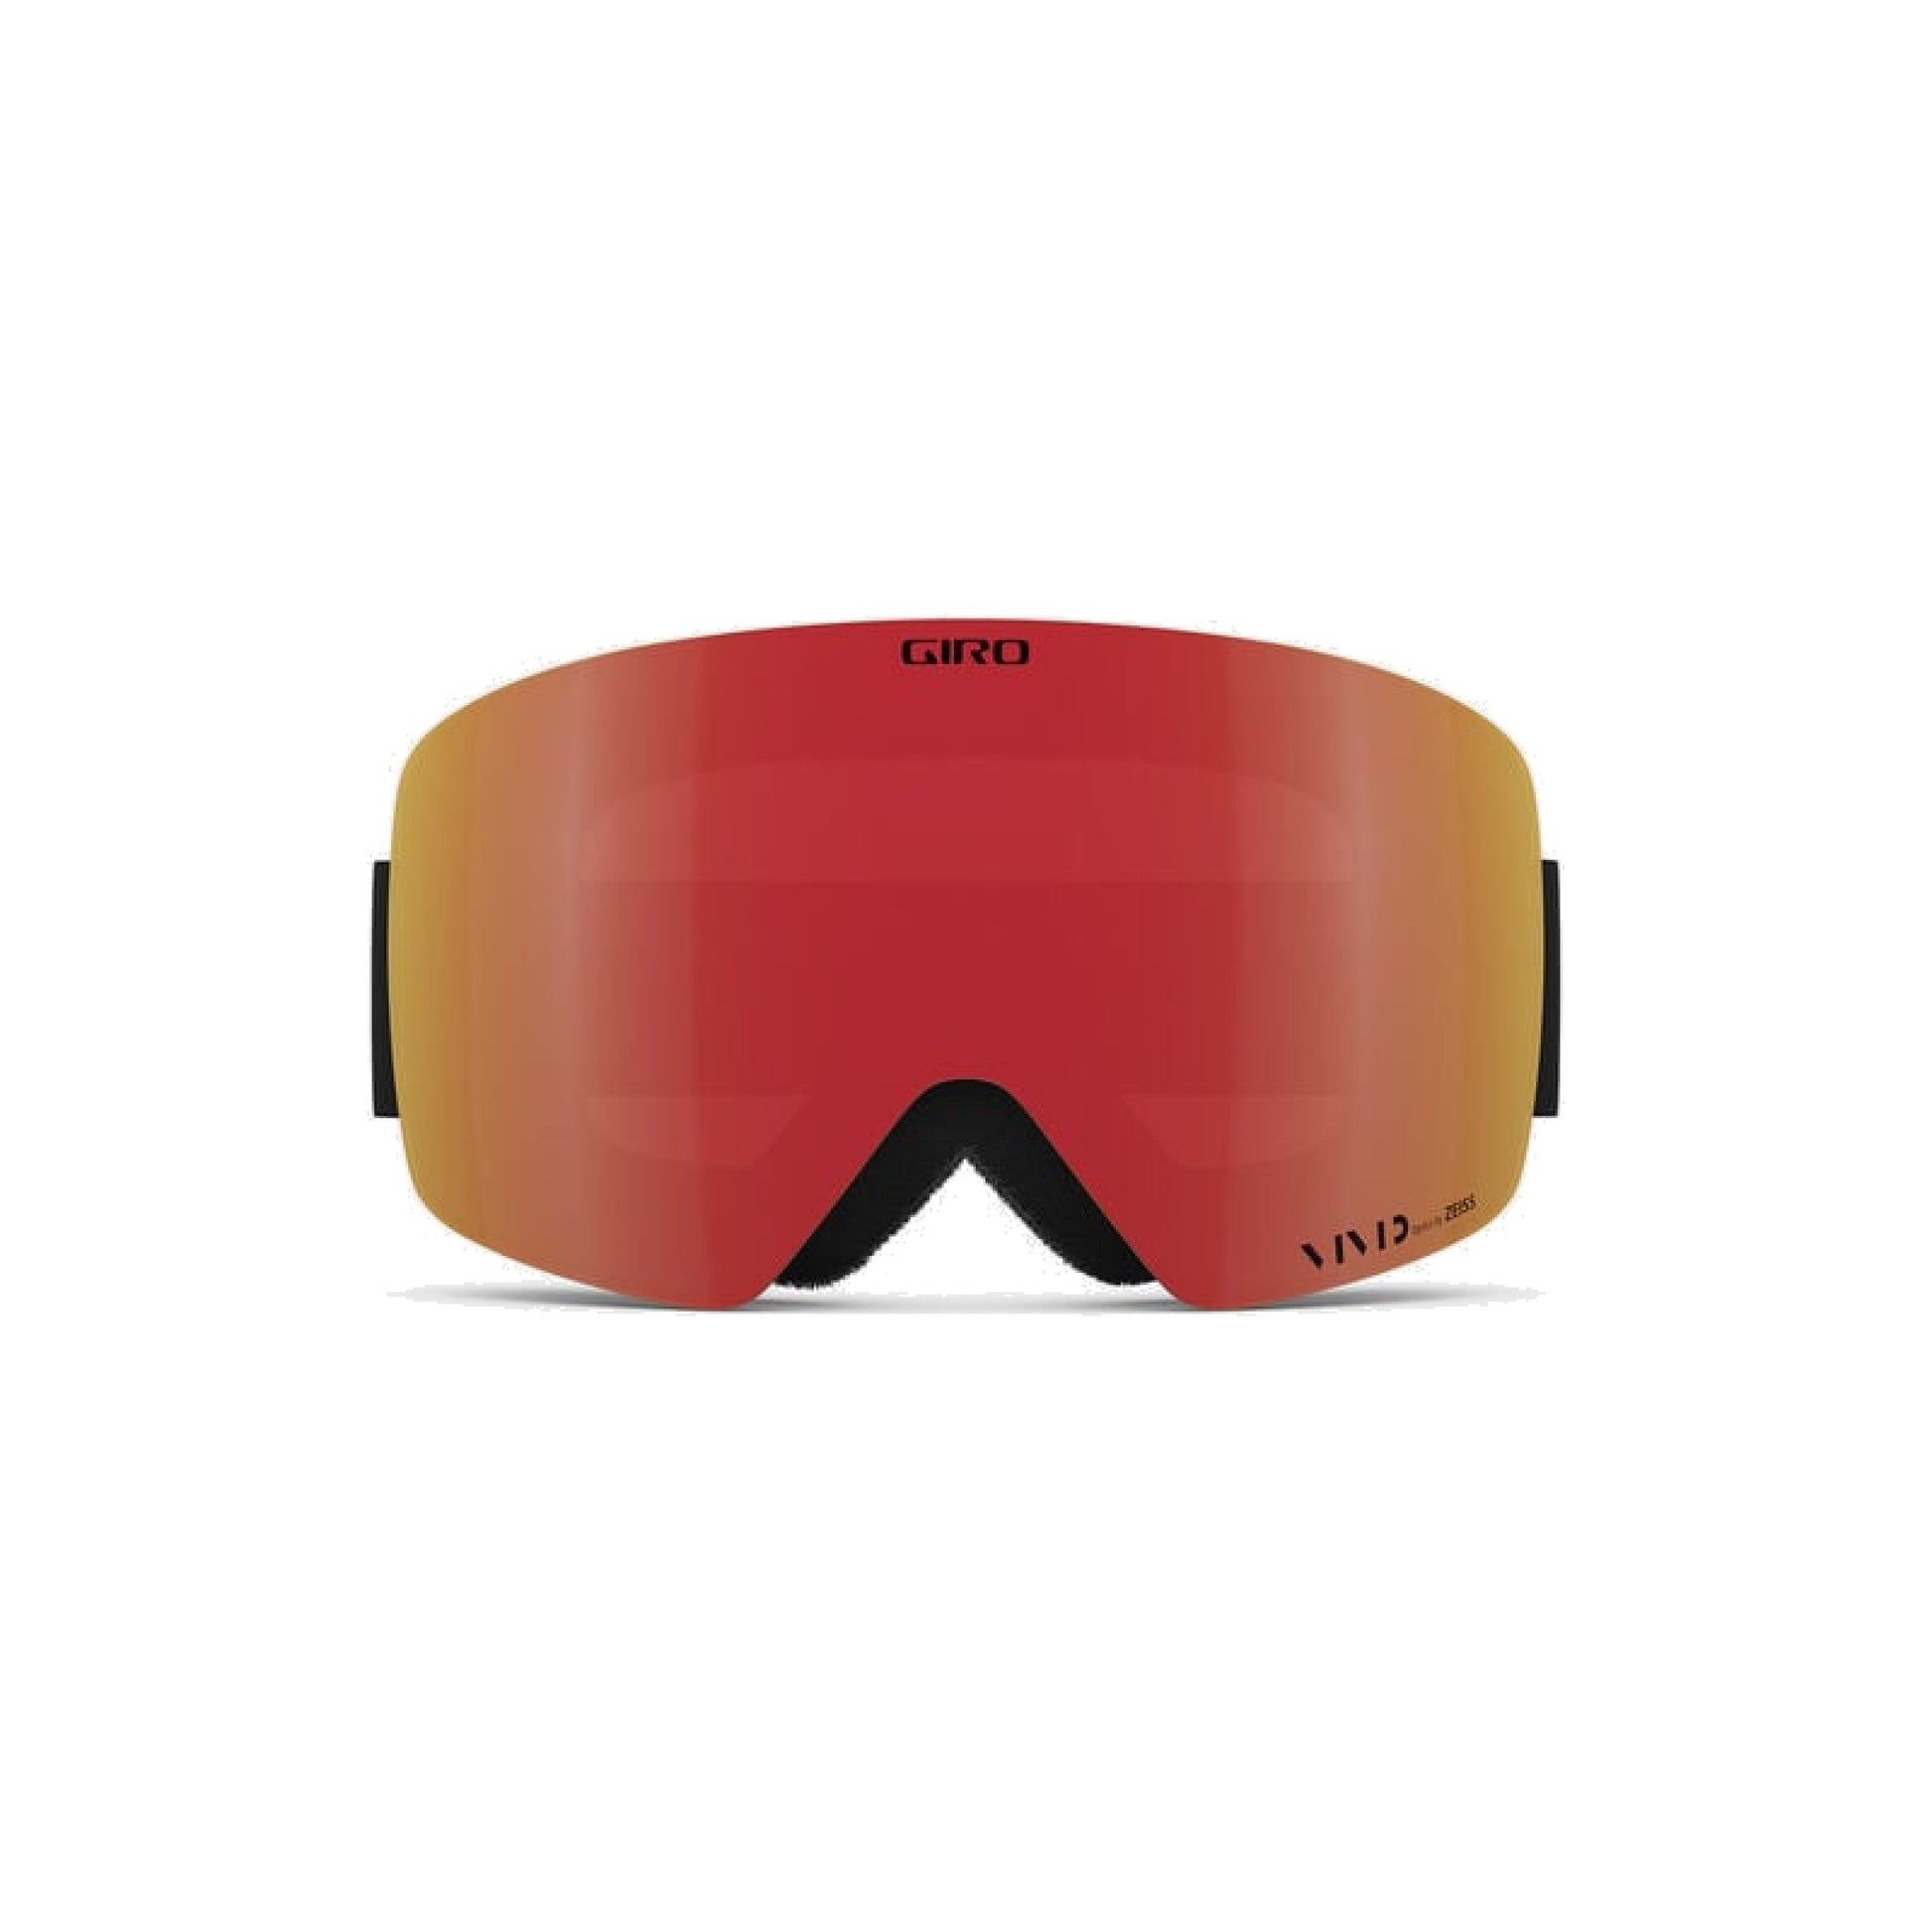 Giro Contour AF Snow Goggles Black Wordmark / Vivid Ember Snow Goggles